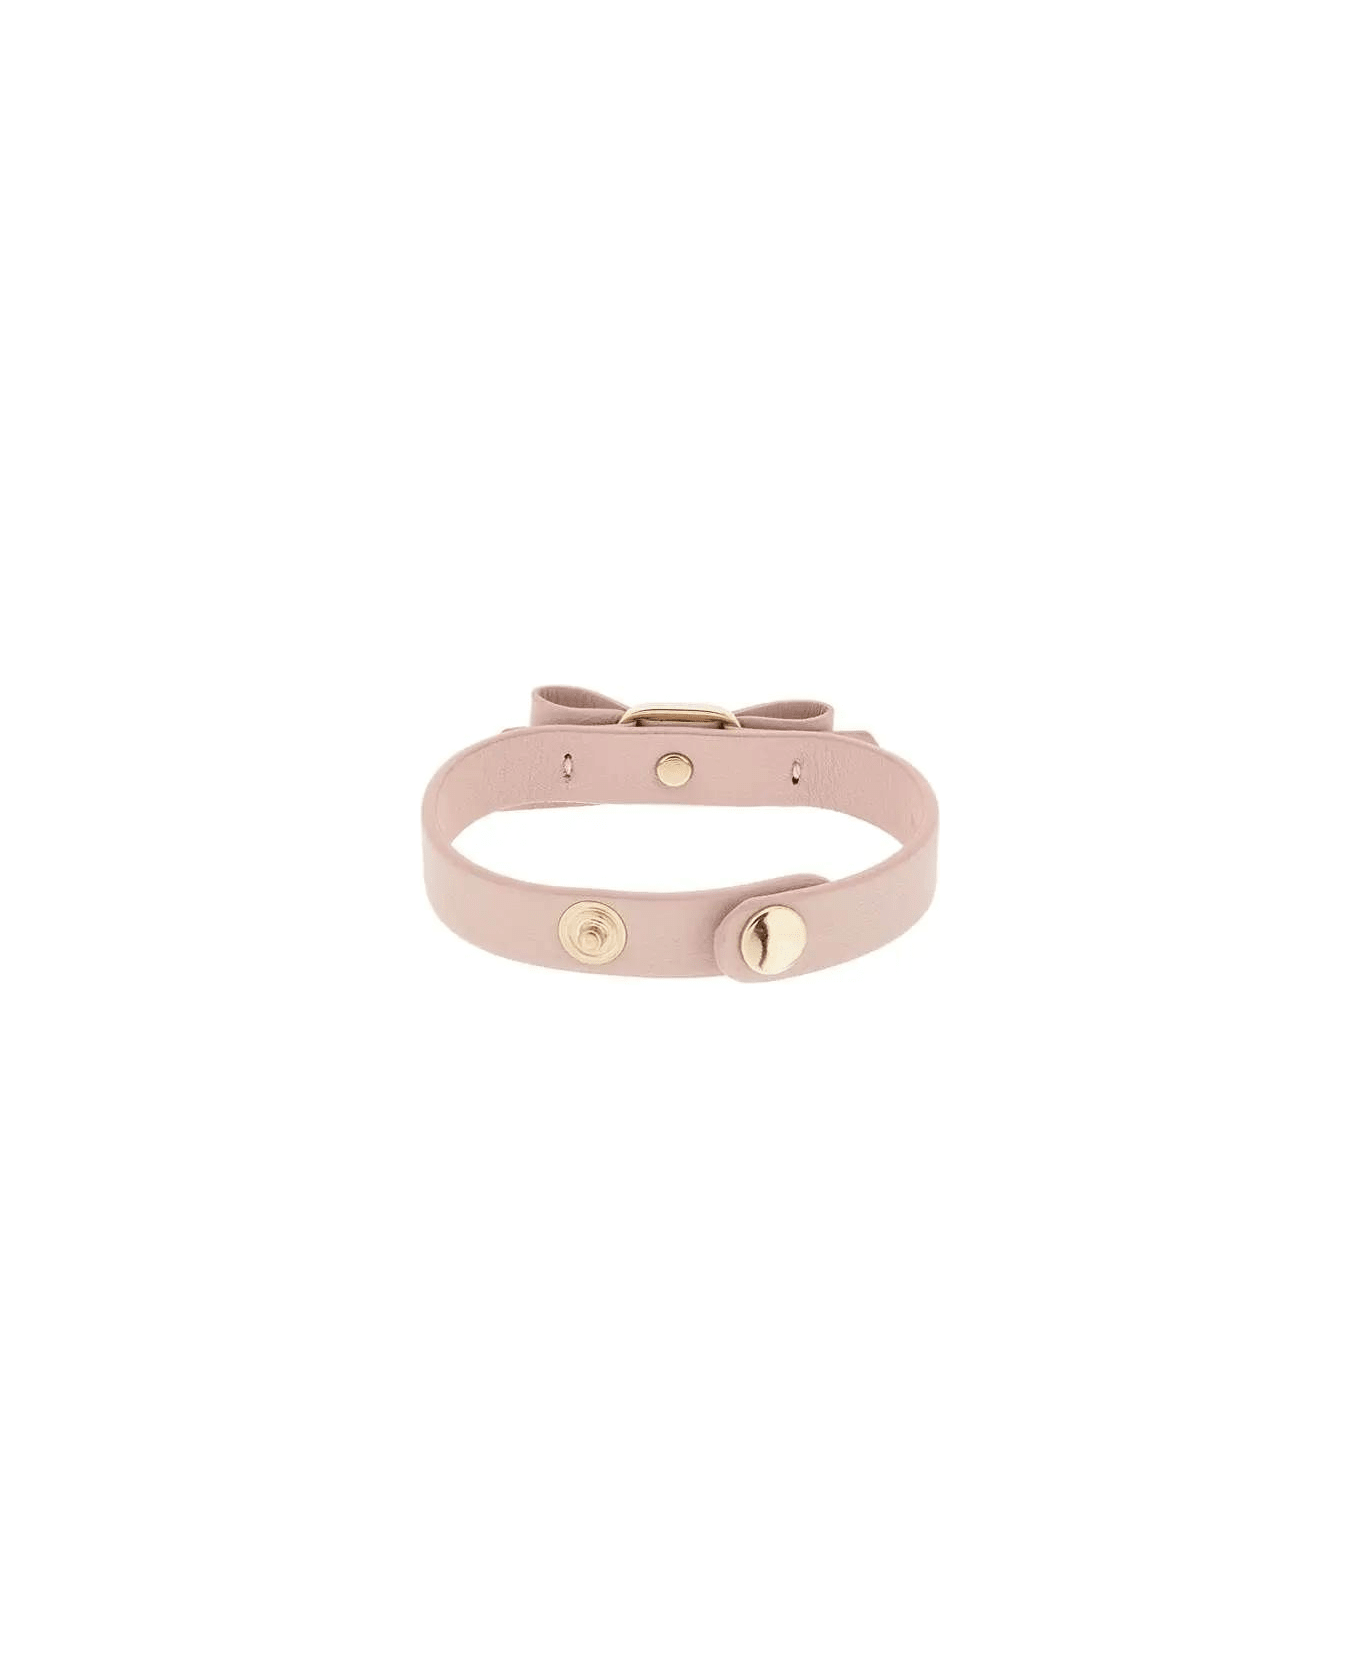 Ferragamo Vara Bow Leather Bracelet - PINK/GOLD